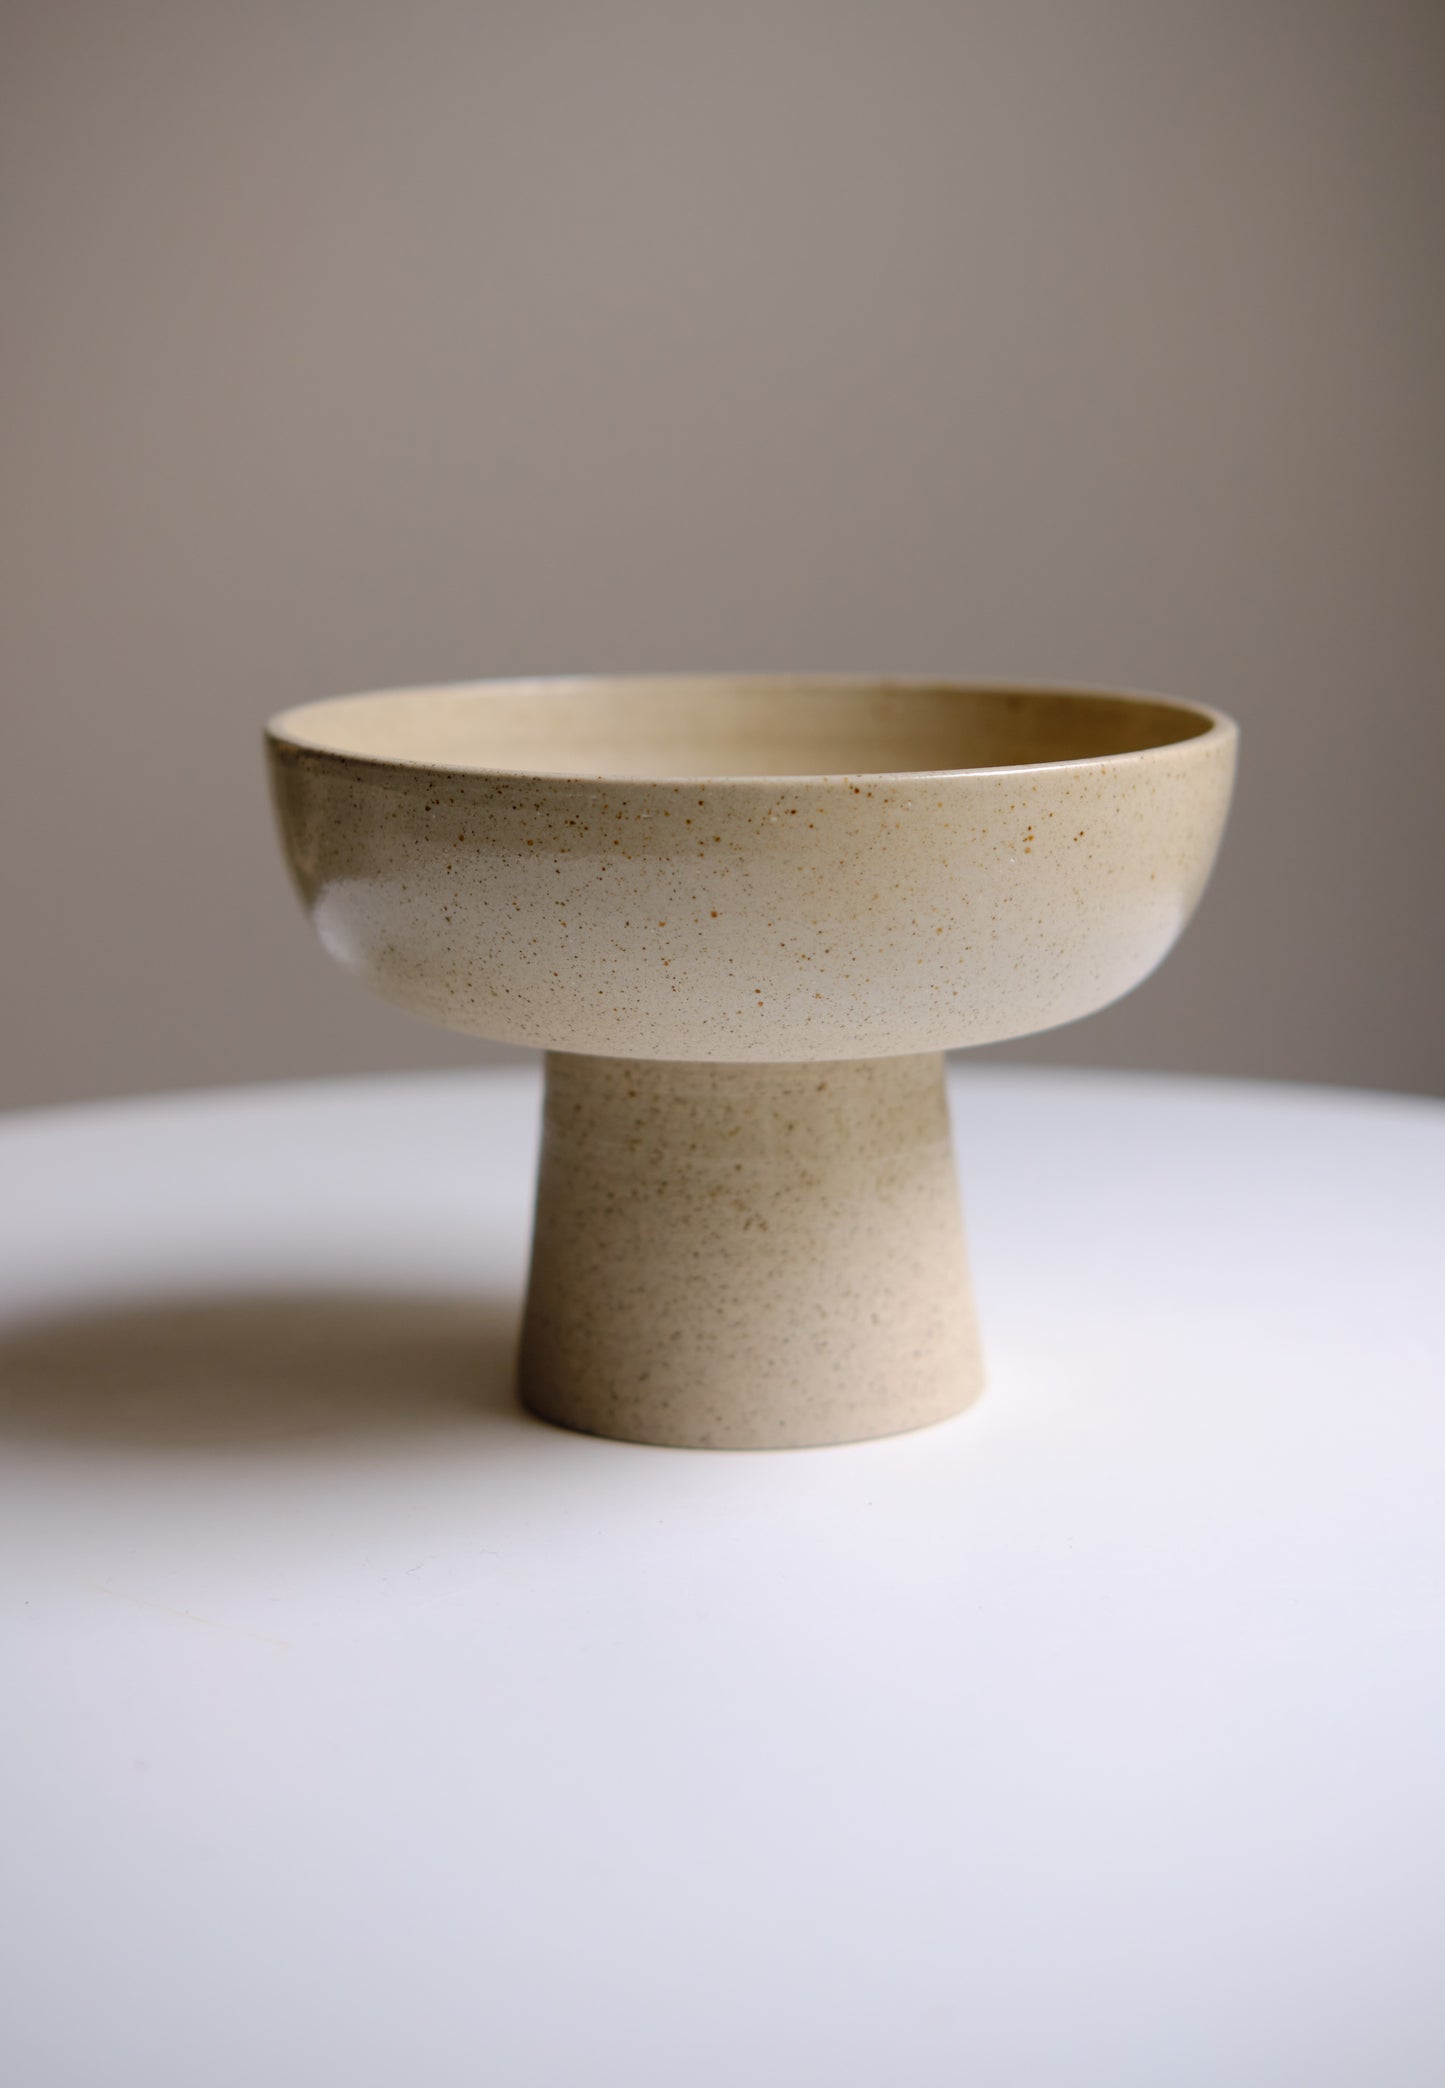 Pedestal bowl no. 29